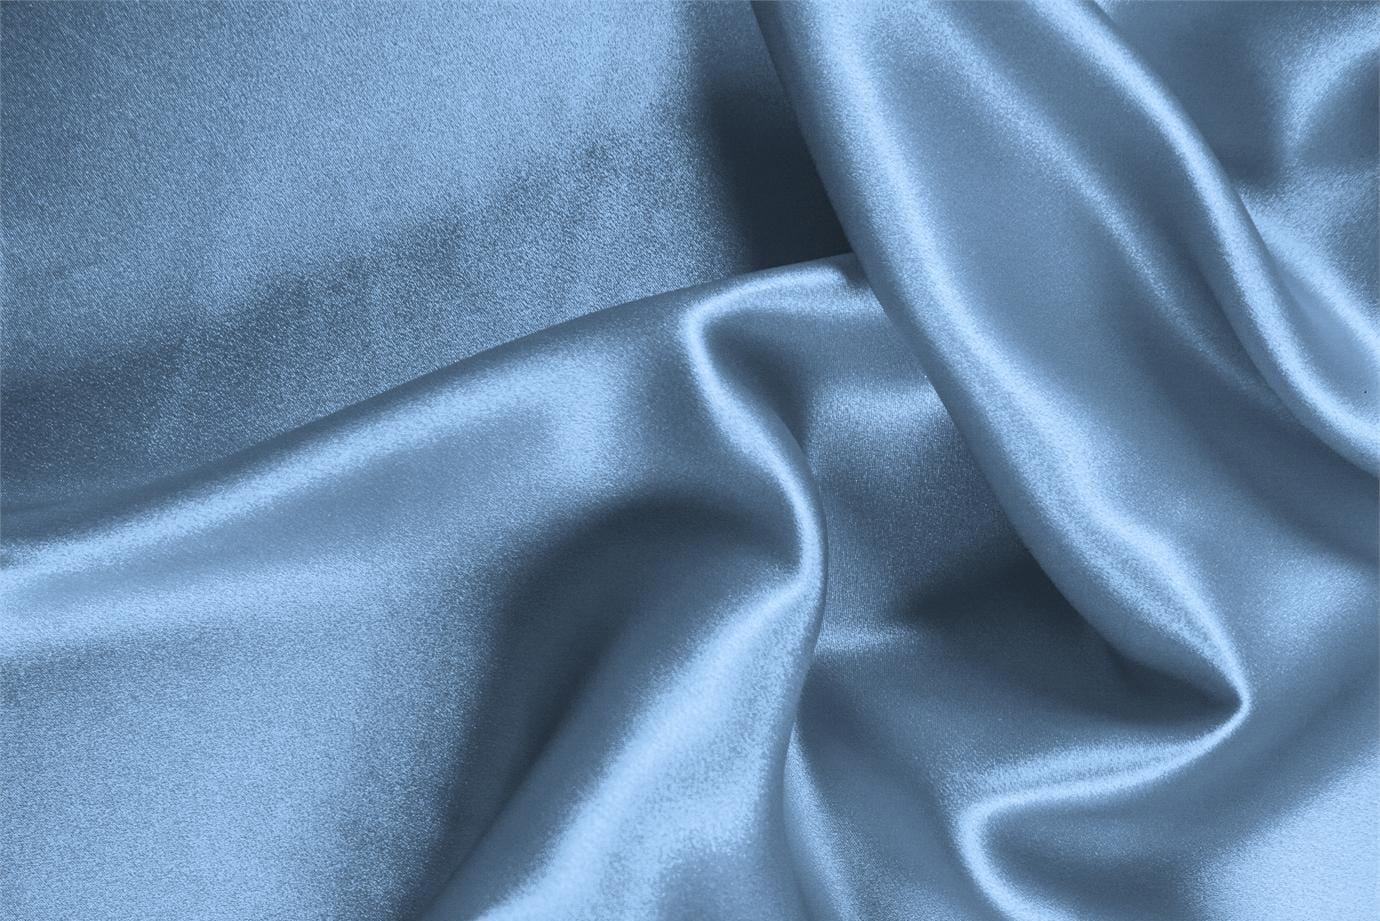 Tissu Crêpe Satin Bleu bleuet en Soie pour vêtements